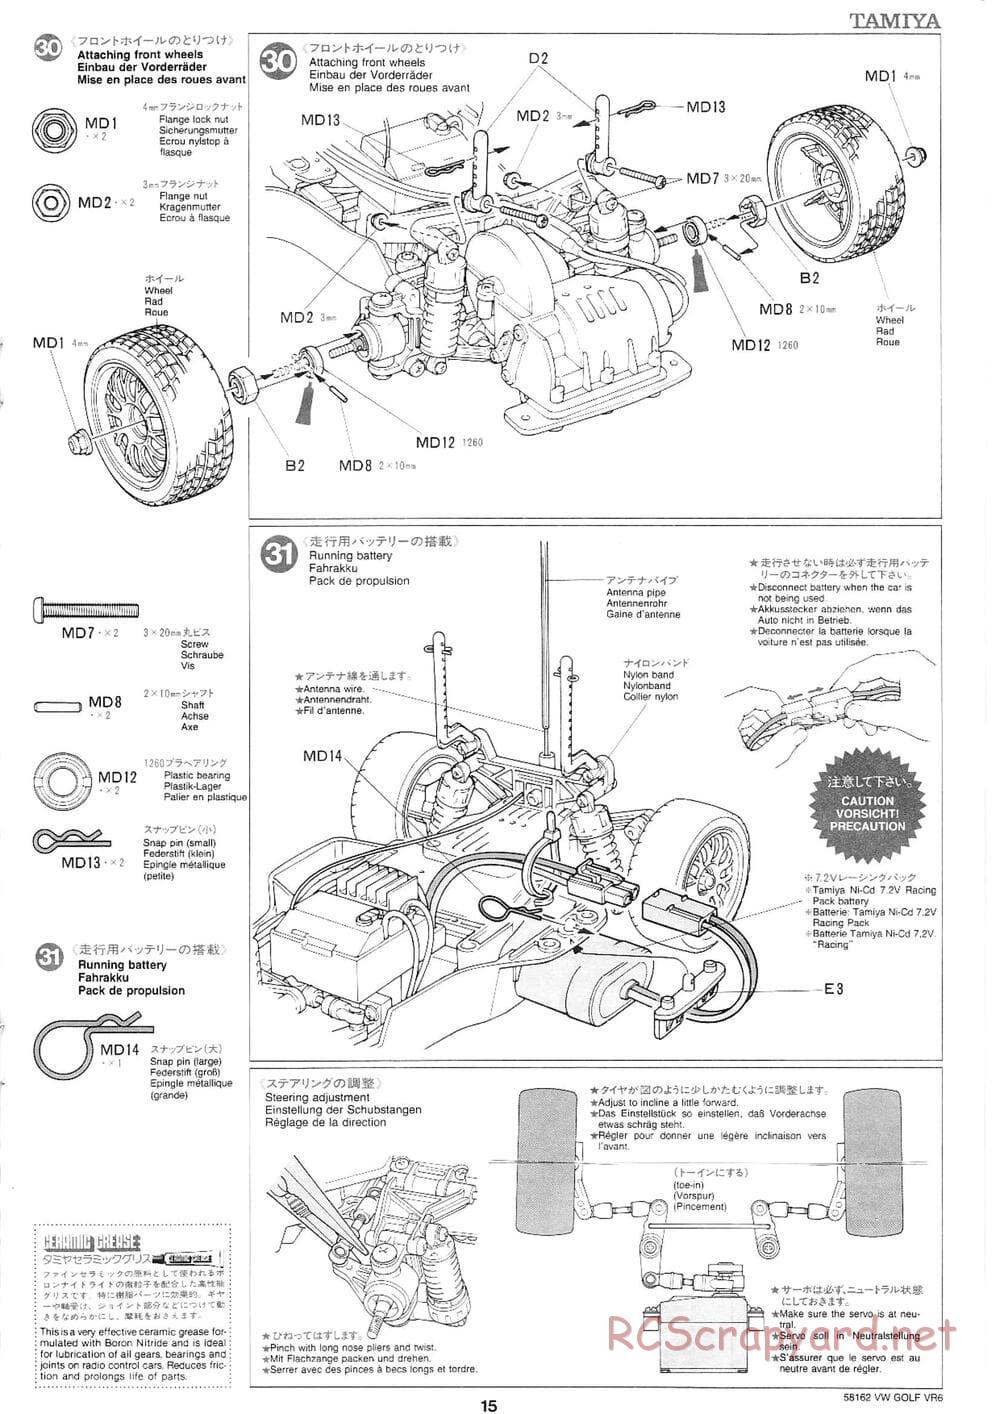 Tamiya - Volkswagen Golf VR6 - FF-01 Chassis - Manual - Page 15